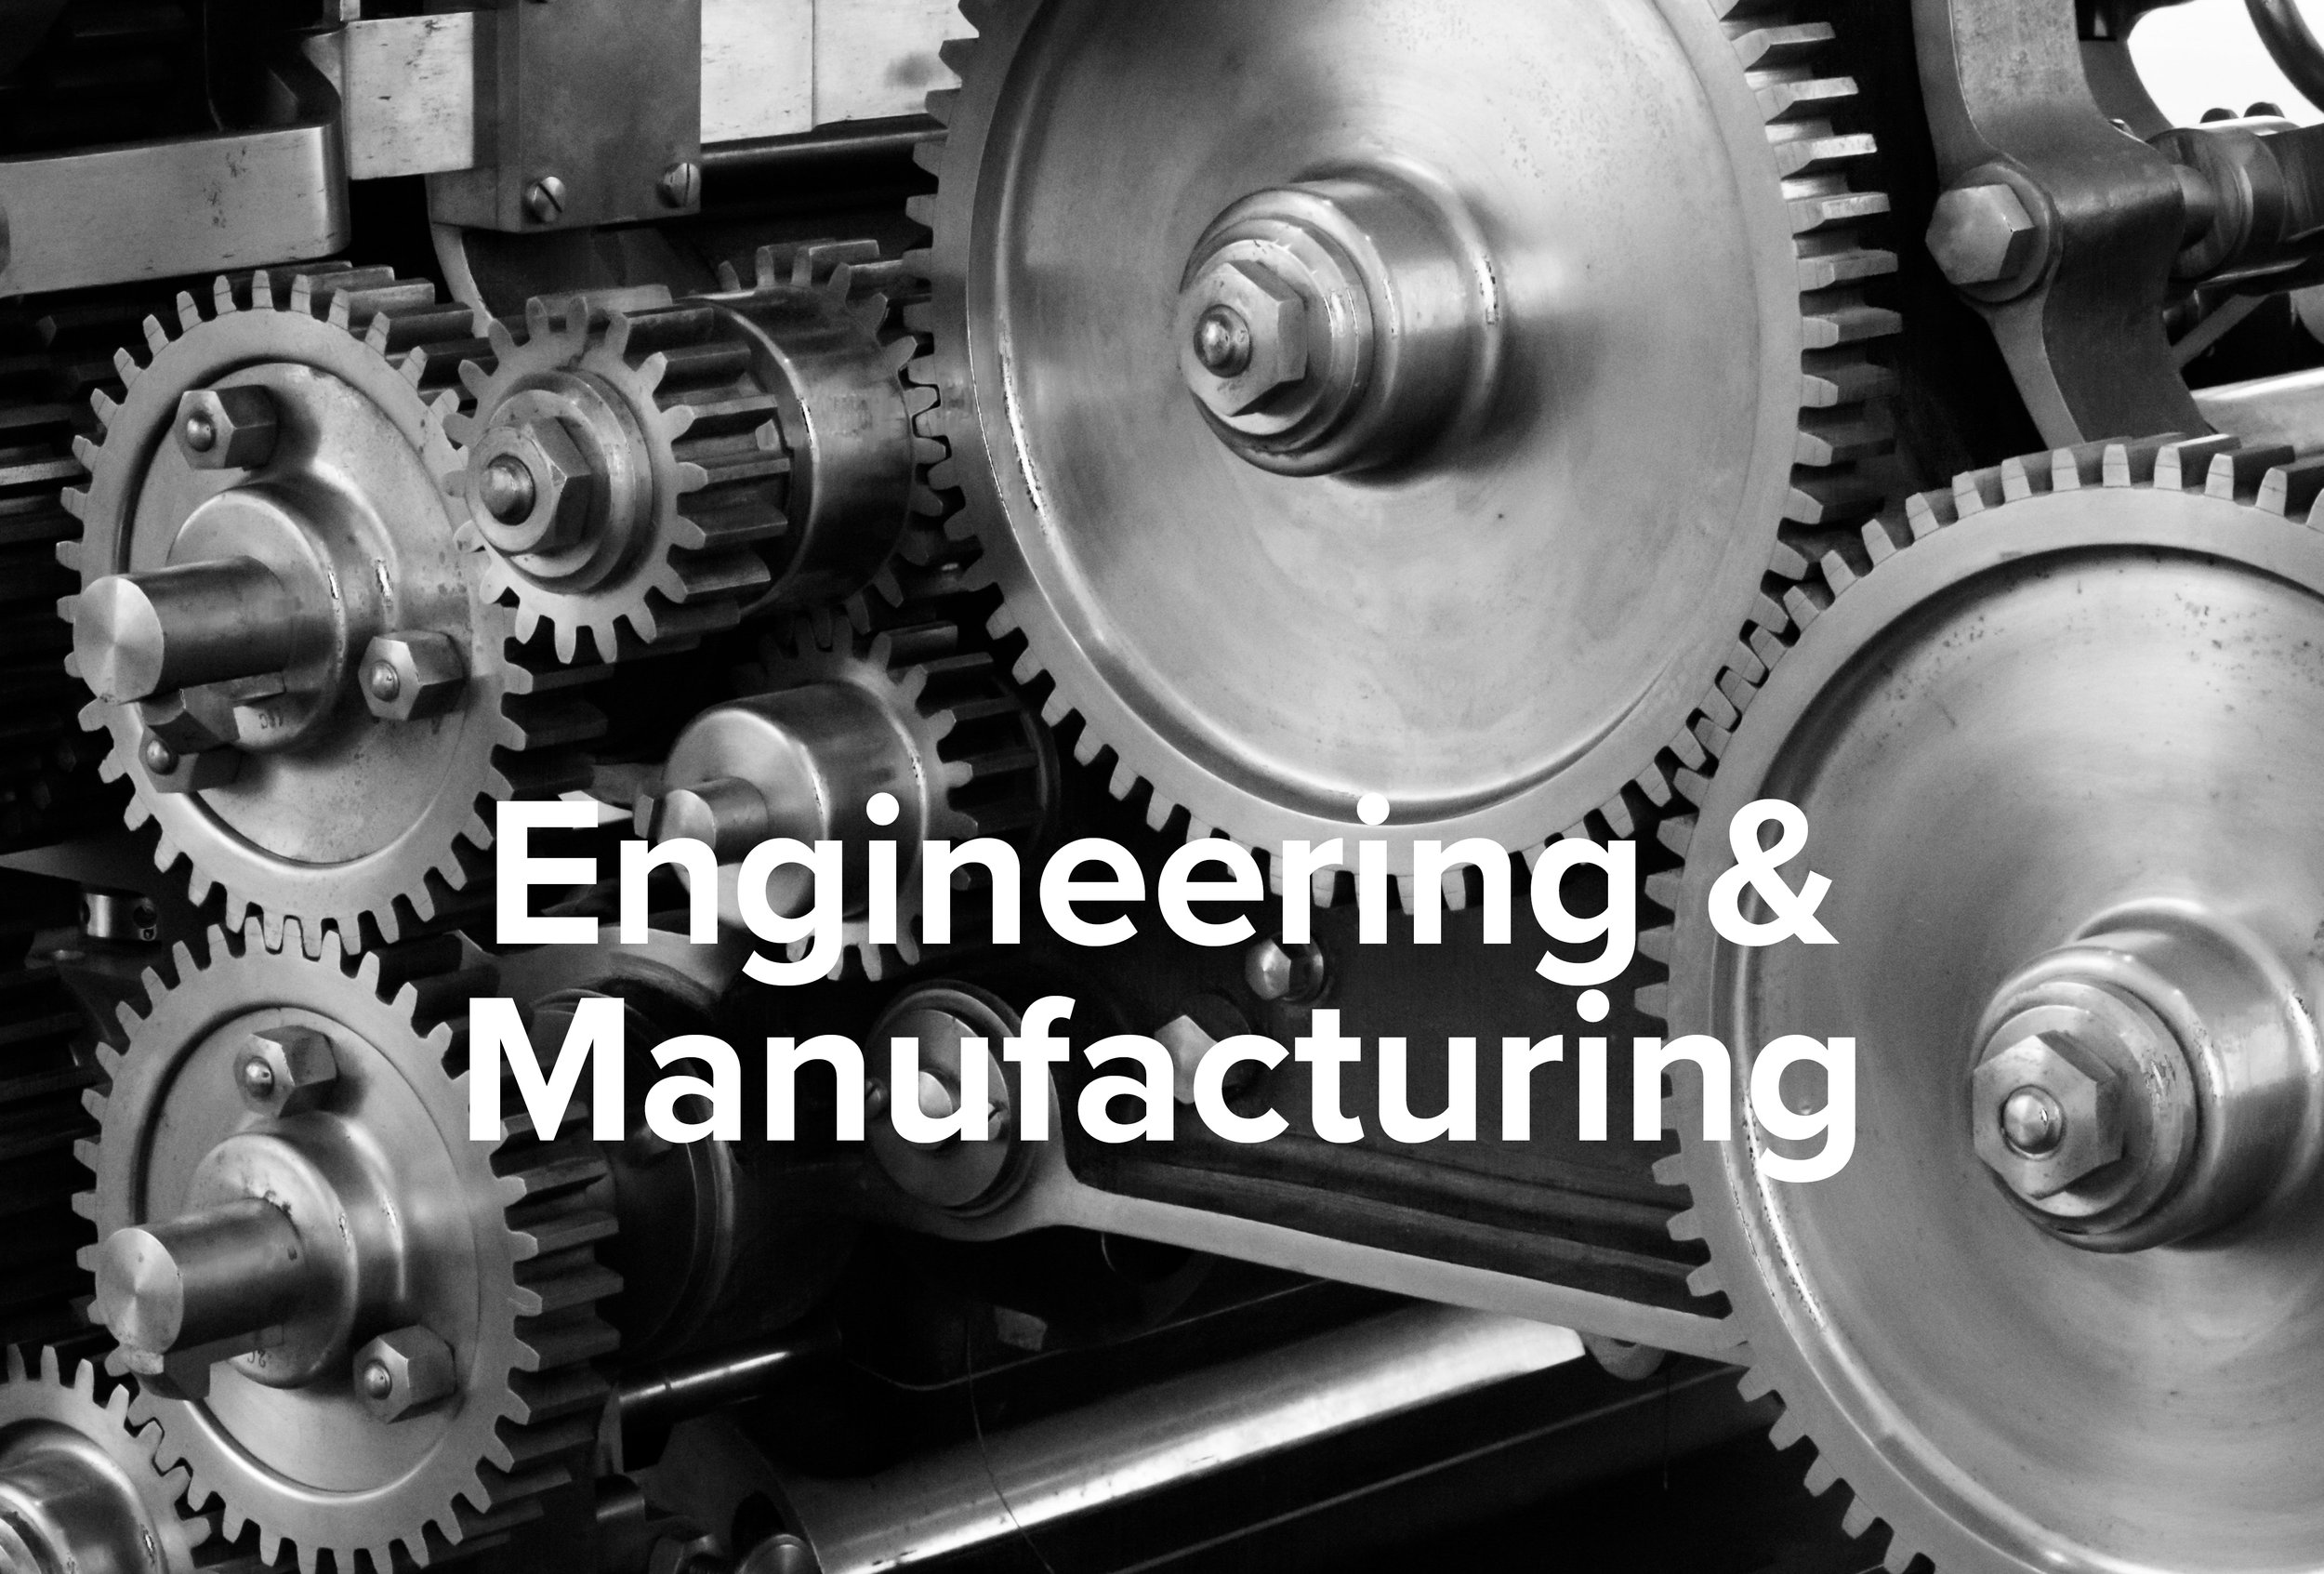 Engineering & Maufacturing new jpg.jpg